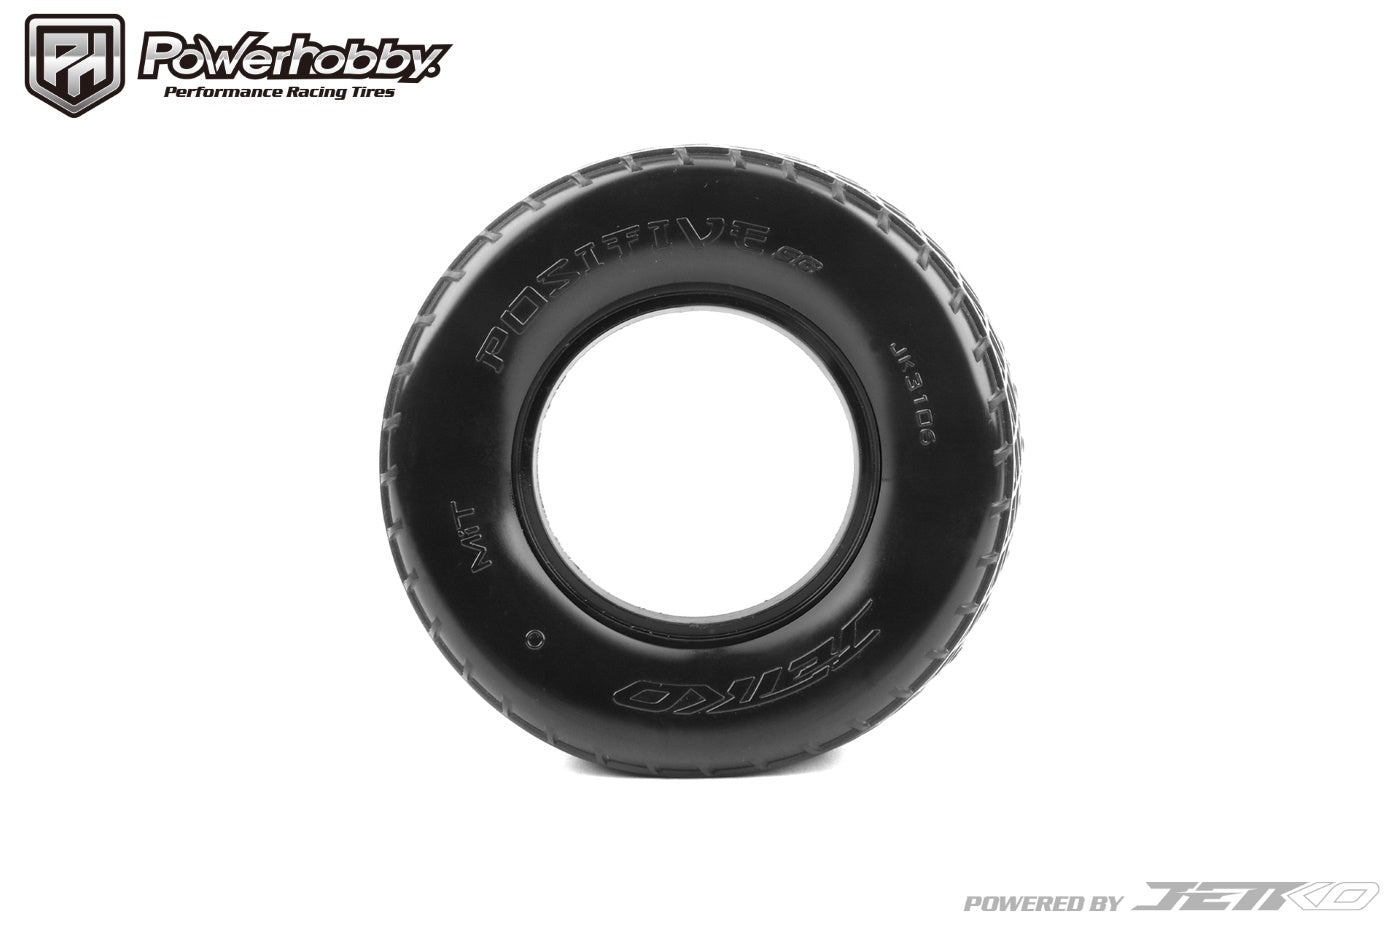 Powerhobby SC-Positive Short Course Clay Tires Ultra Soft.